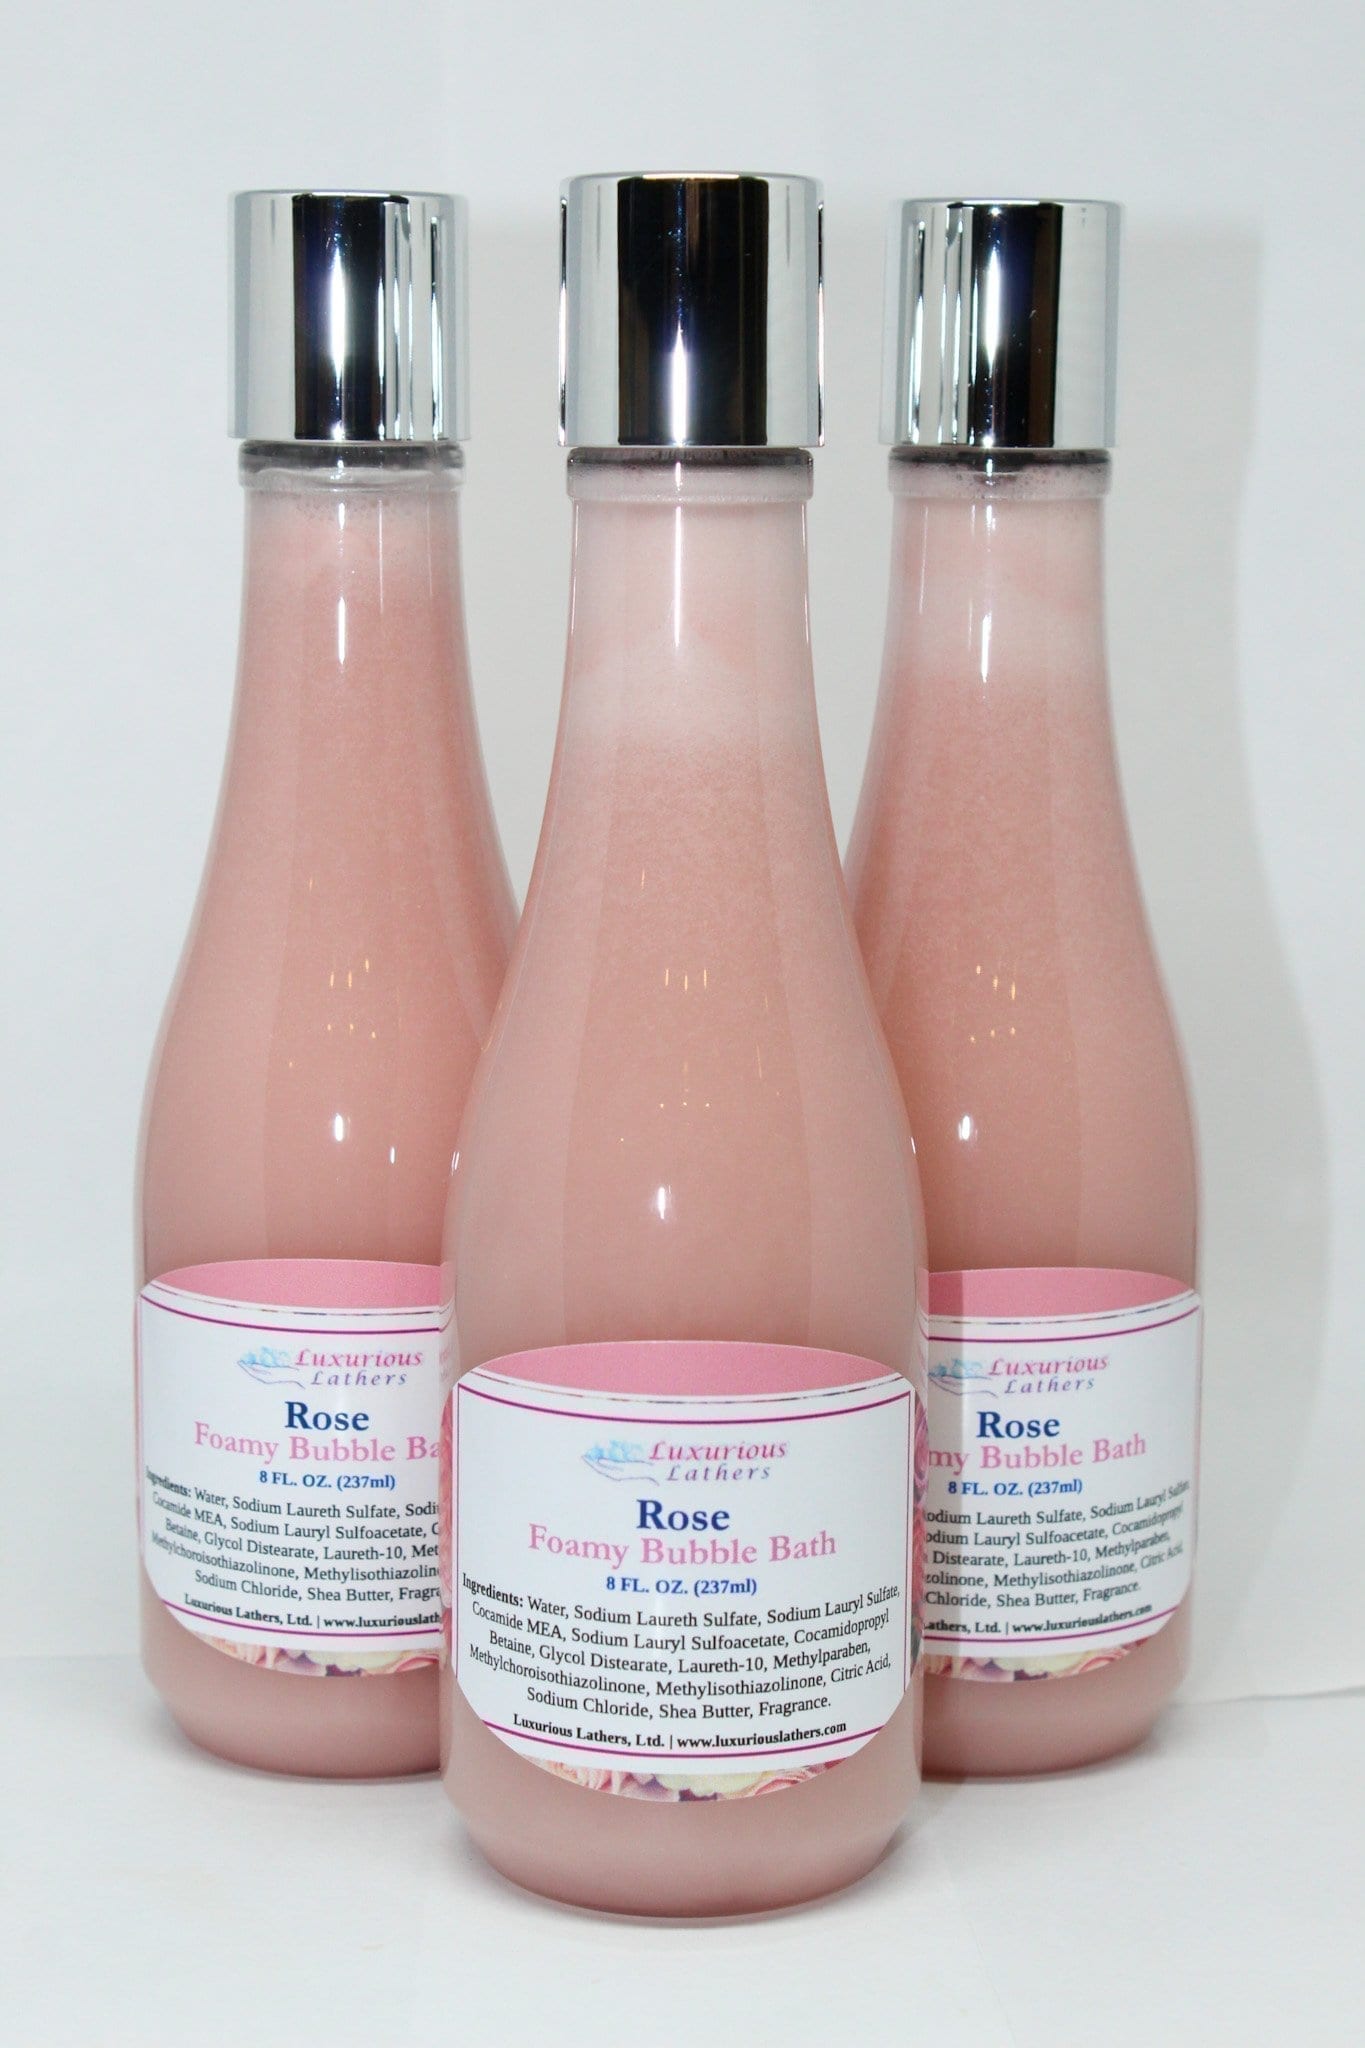 Rose Foamy Bubble Bath - Luxurious Lathers